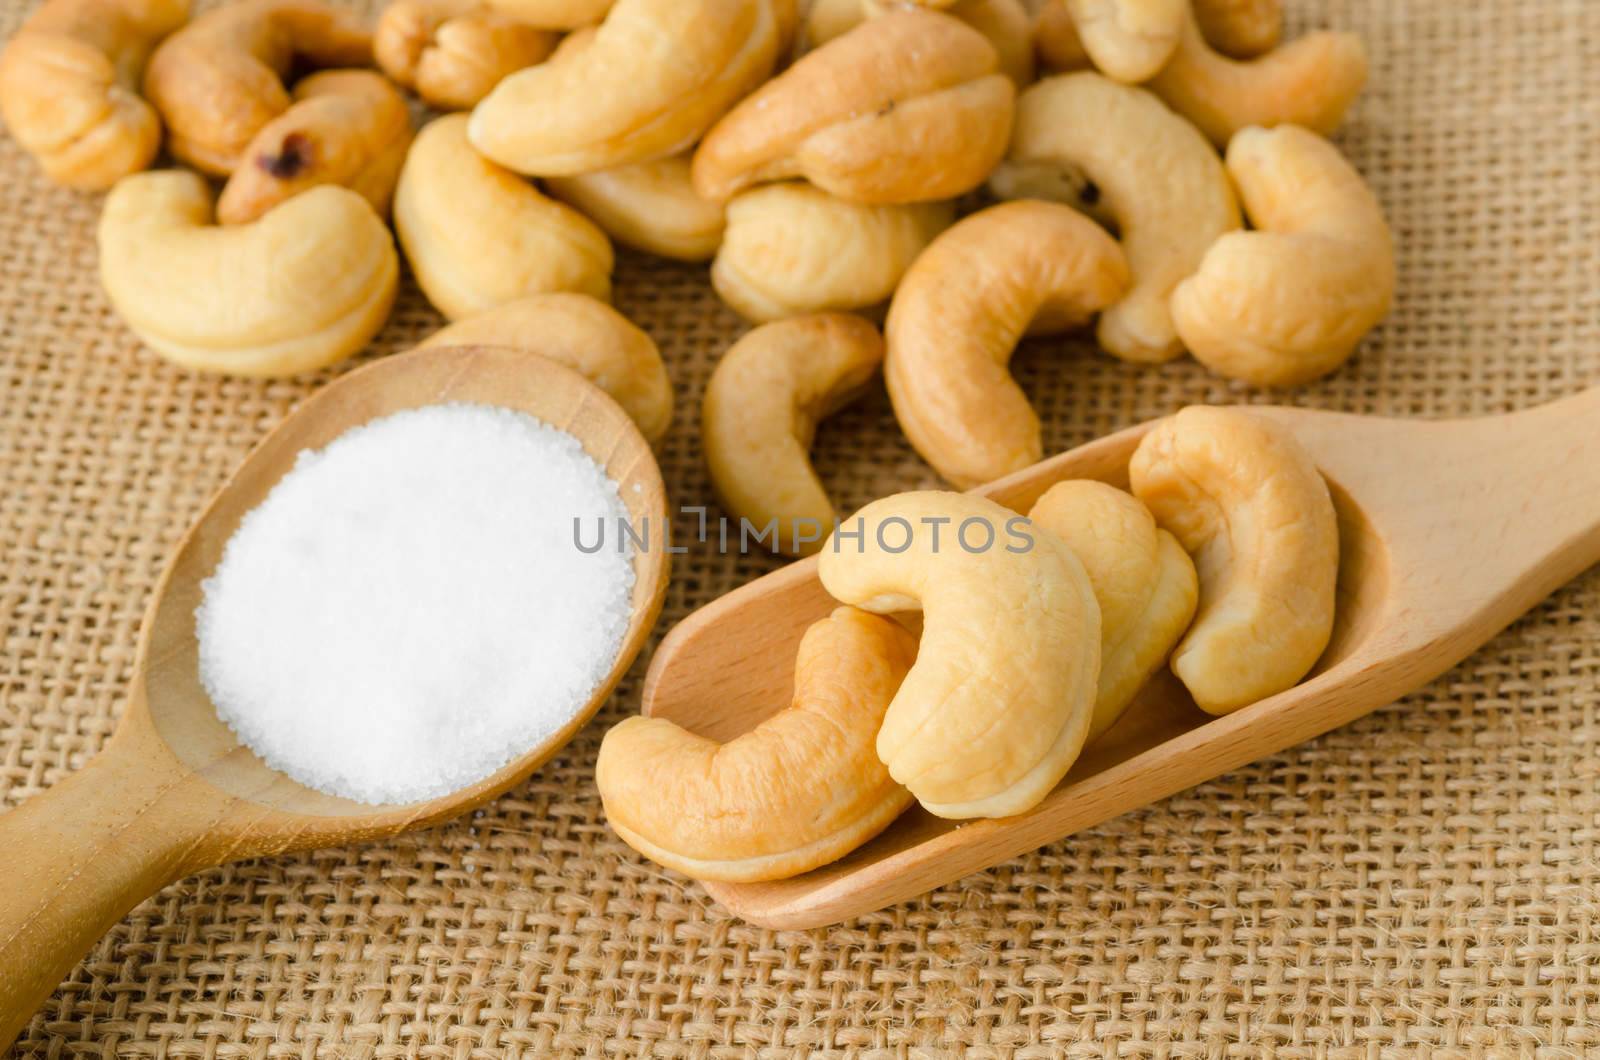 Roasted cashews by Gamjai